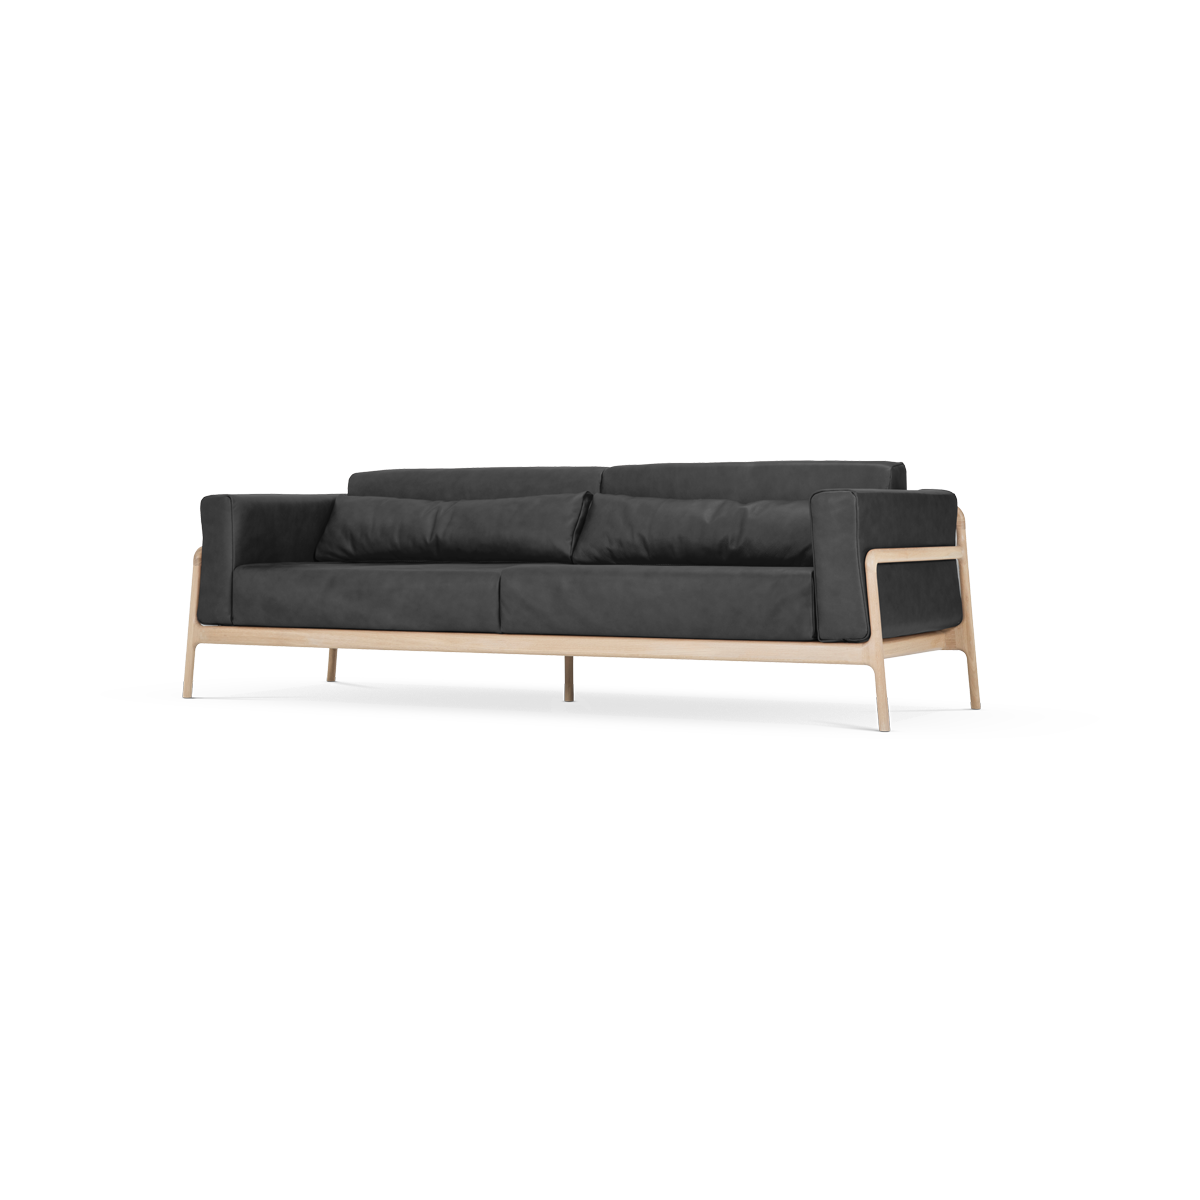 Fawn sofa 3 plus seater bank dakar leather black 0500 - 240 cm